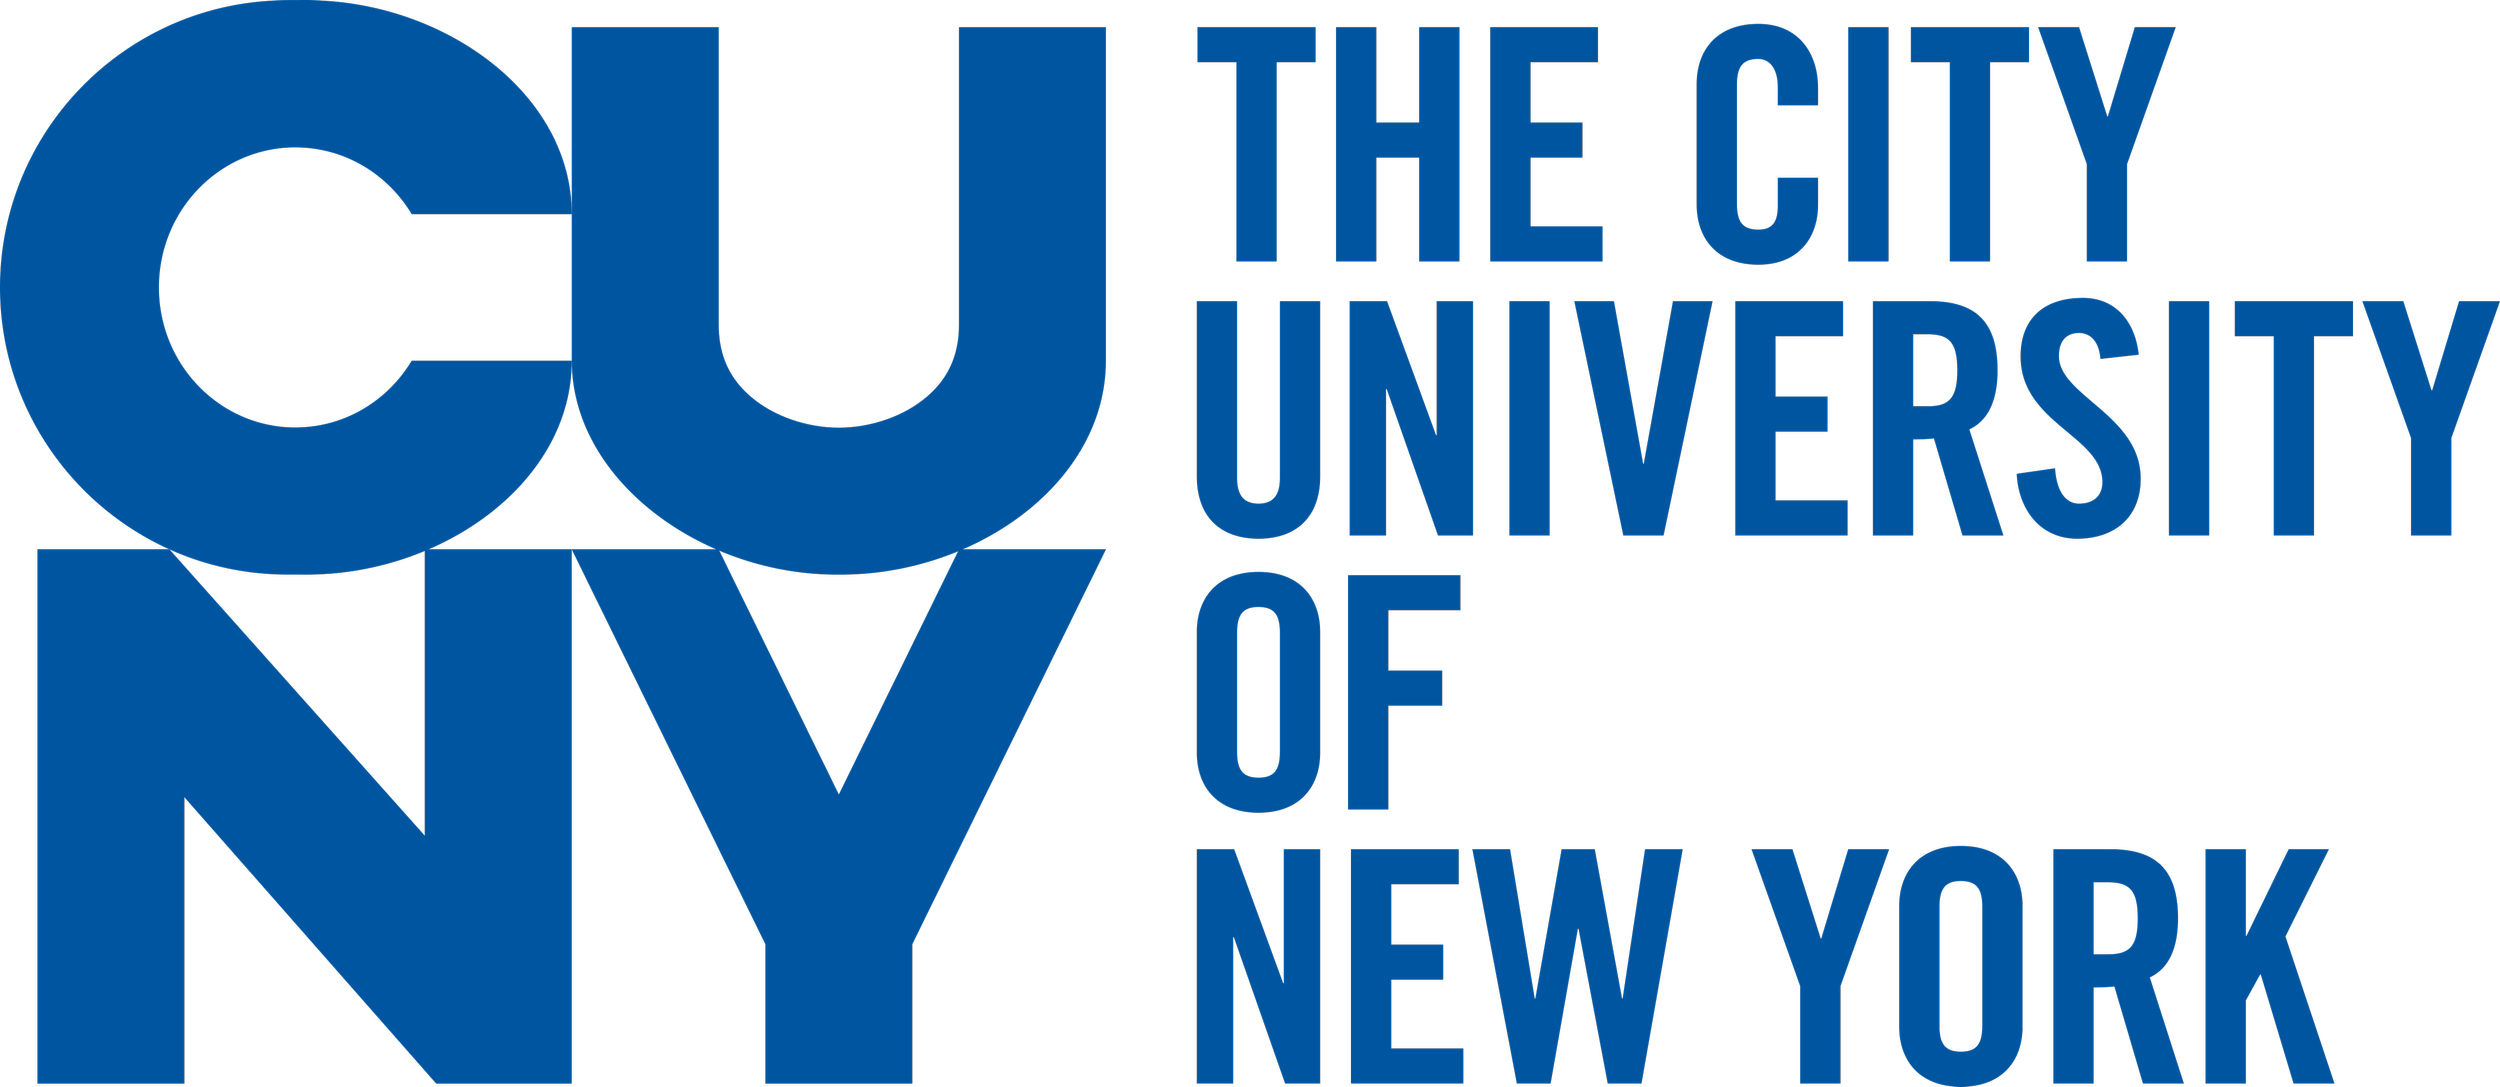 City_University_of_New_York_Logo_blue_text.png